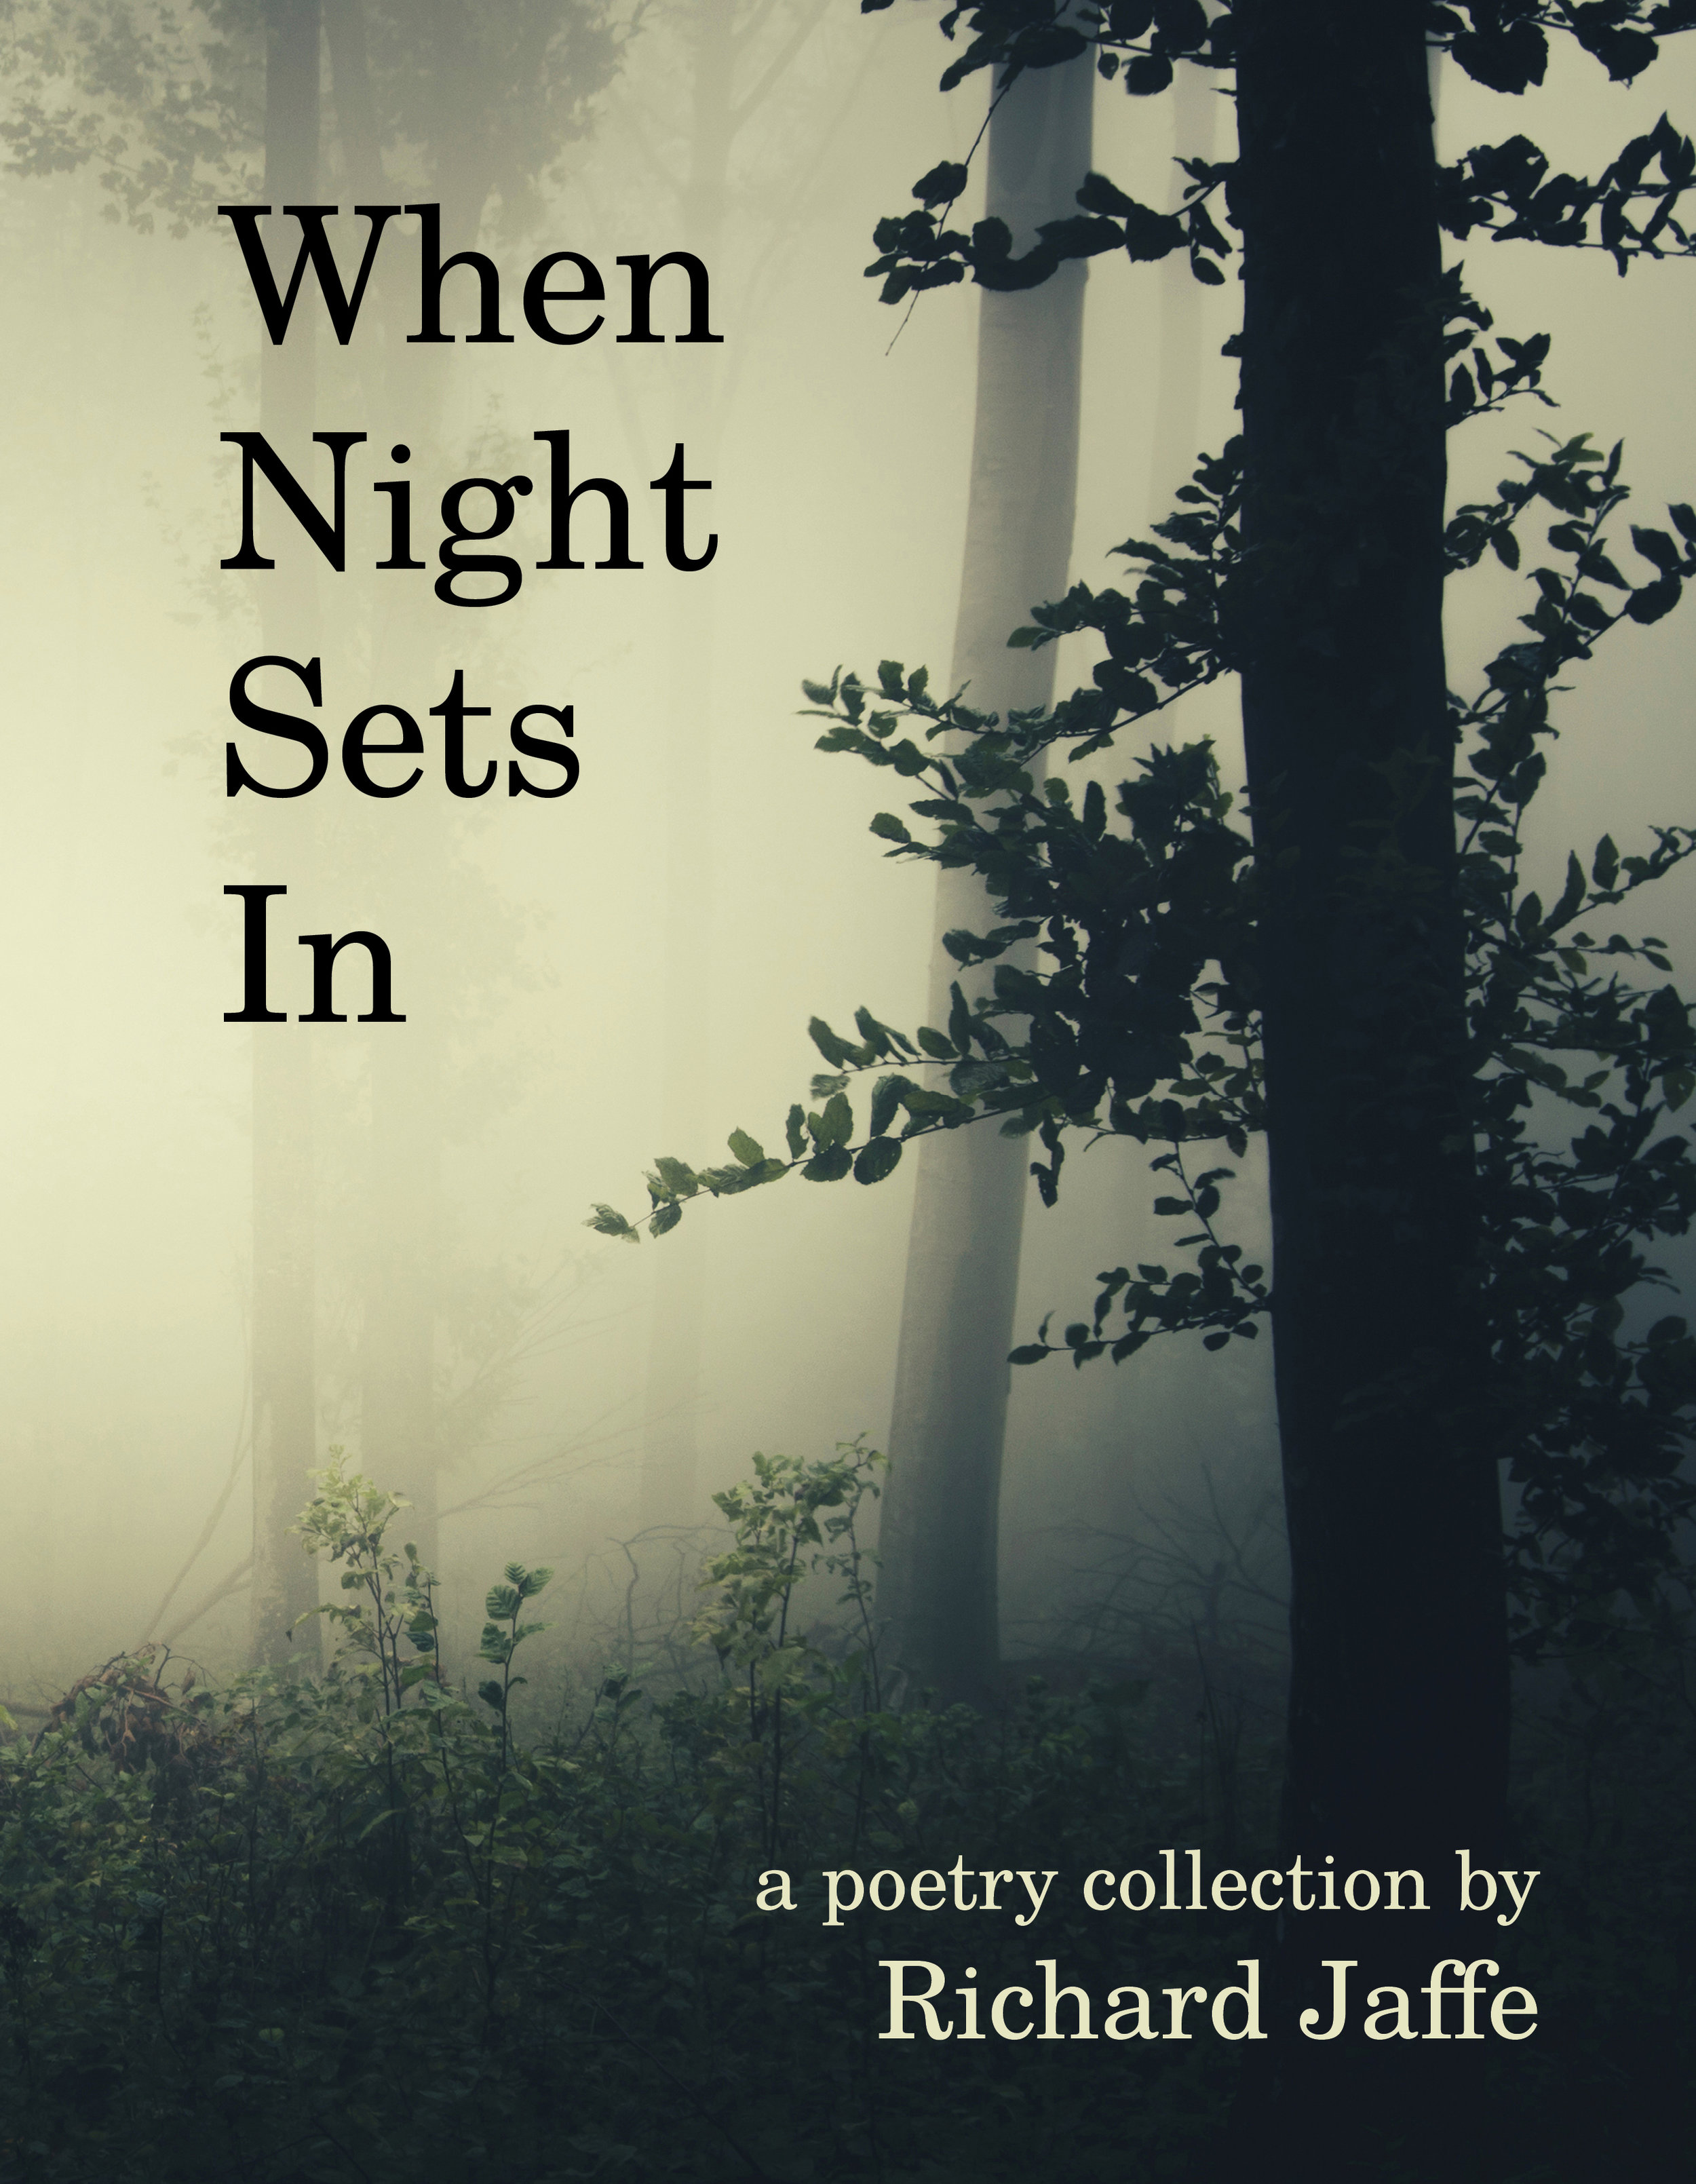 When Night Sets In by Richard Jaffe